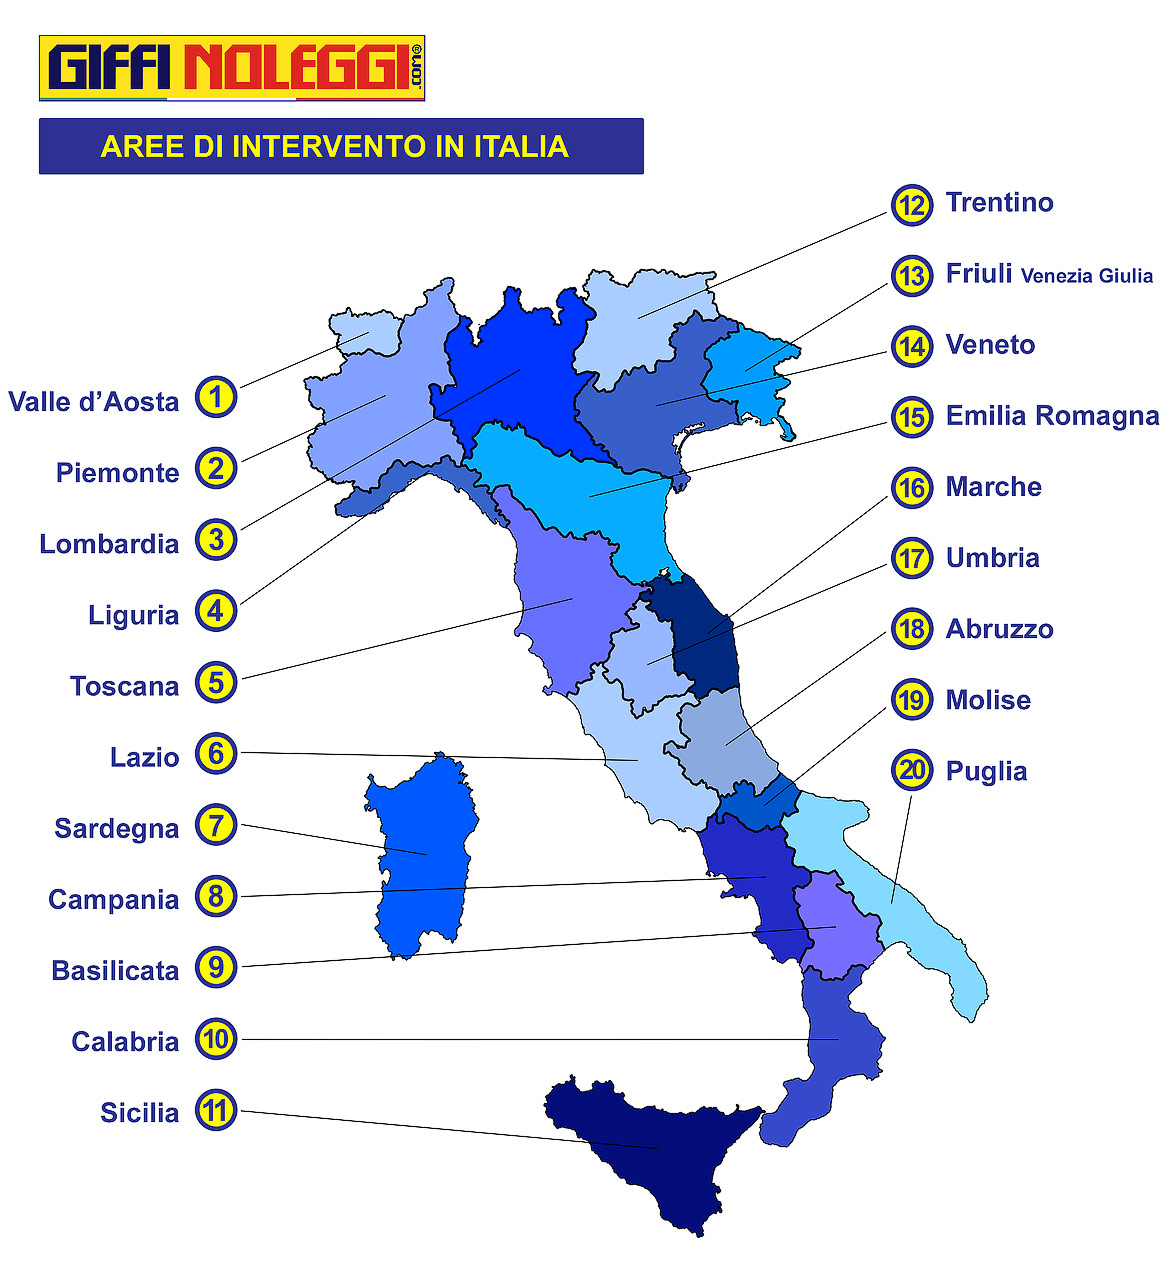 Noleggio Italia mappa Giffi Noleggi